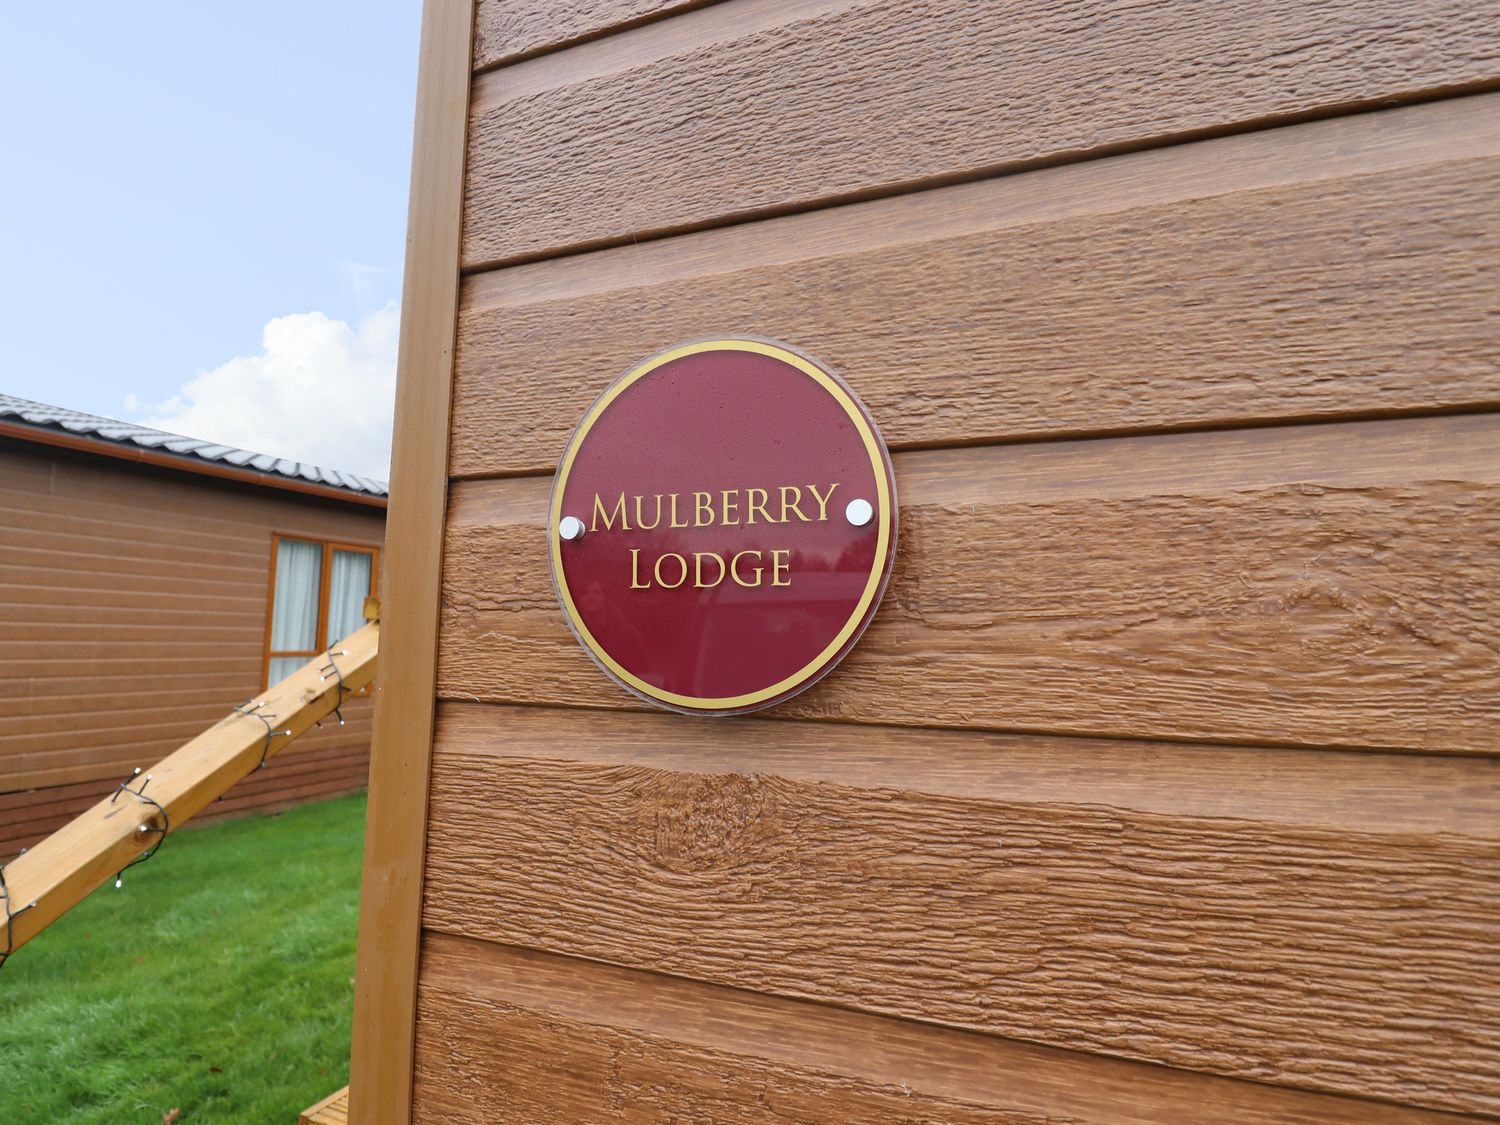 Mulberry Lodge, Malton